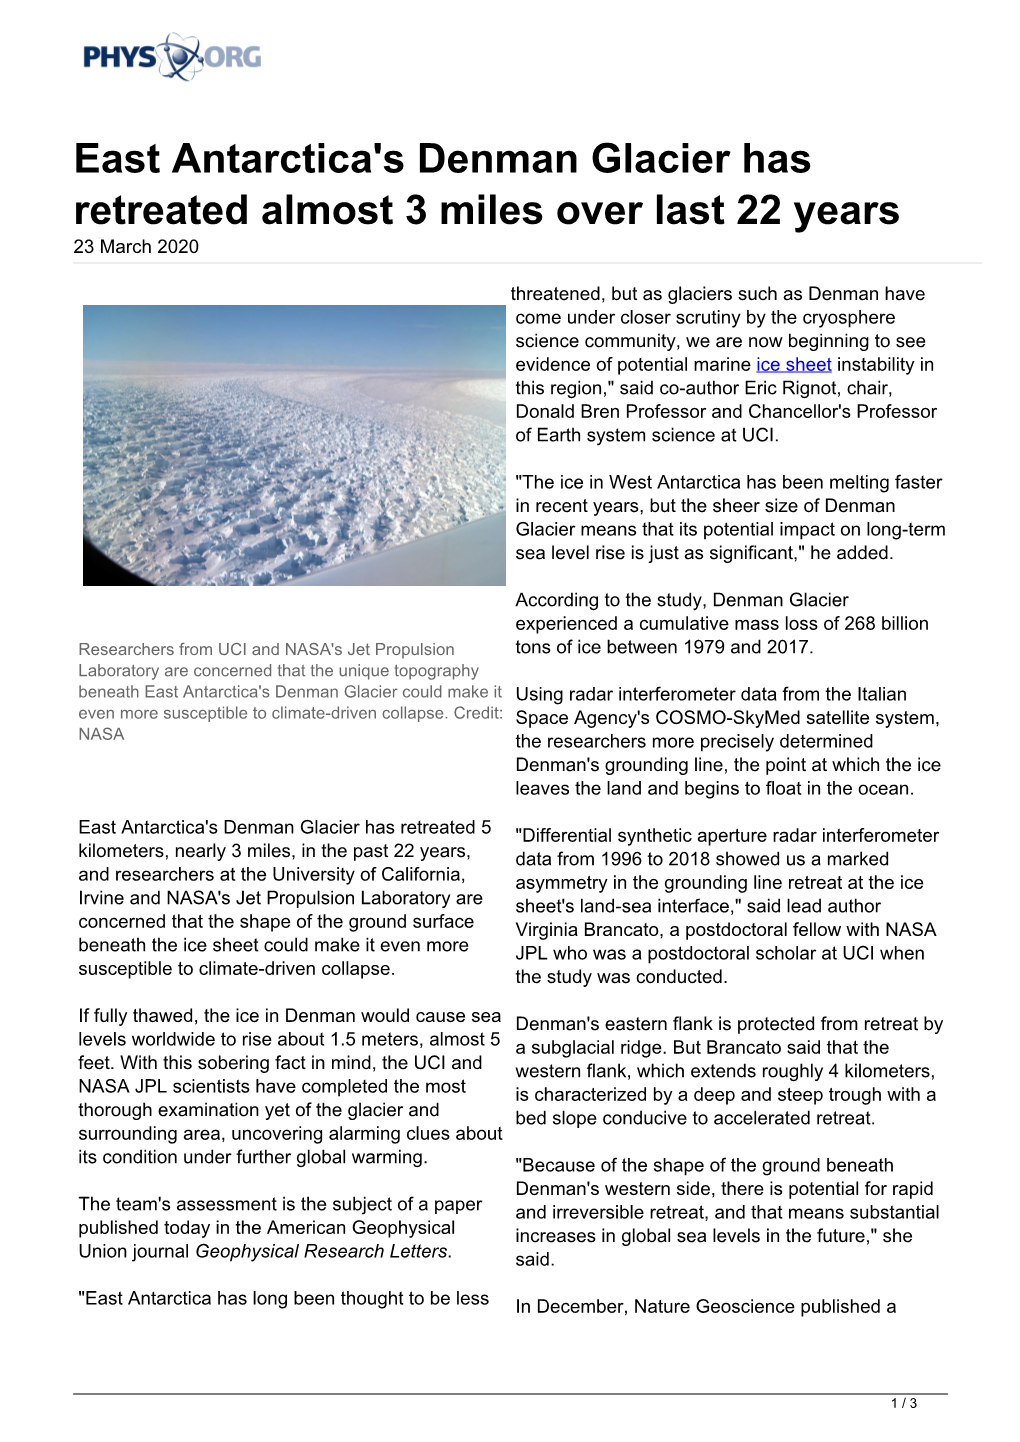 East Antarctica's Denman Glacier Has Retreated Almost 3 Miles Over Last 22 Years 23 March 2020